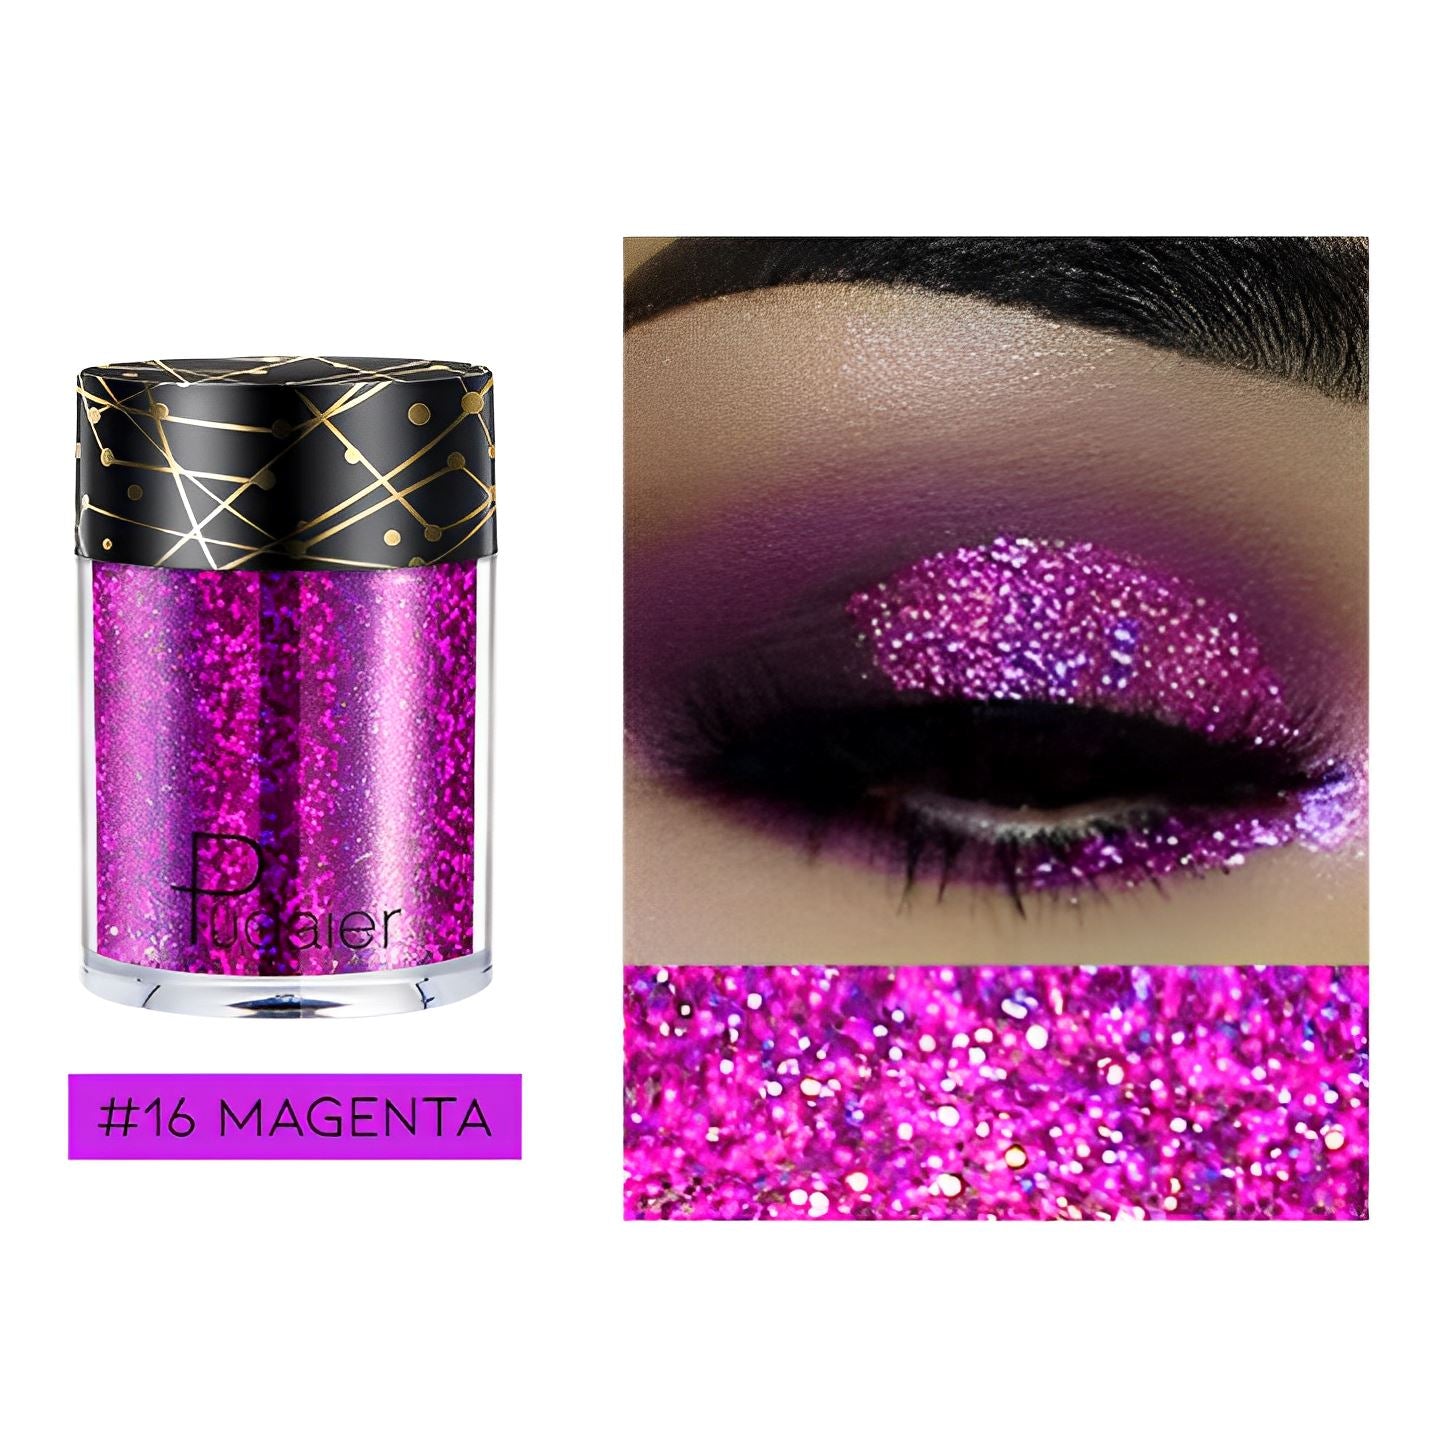 Single Shade High Shine Glitter Make-up Every Day And Night #16 Magenta 